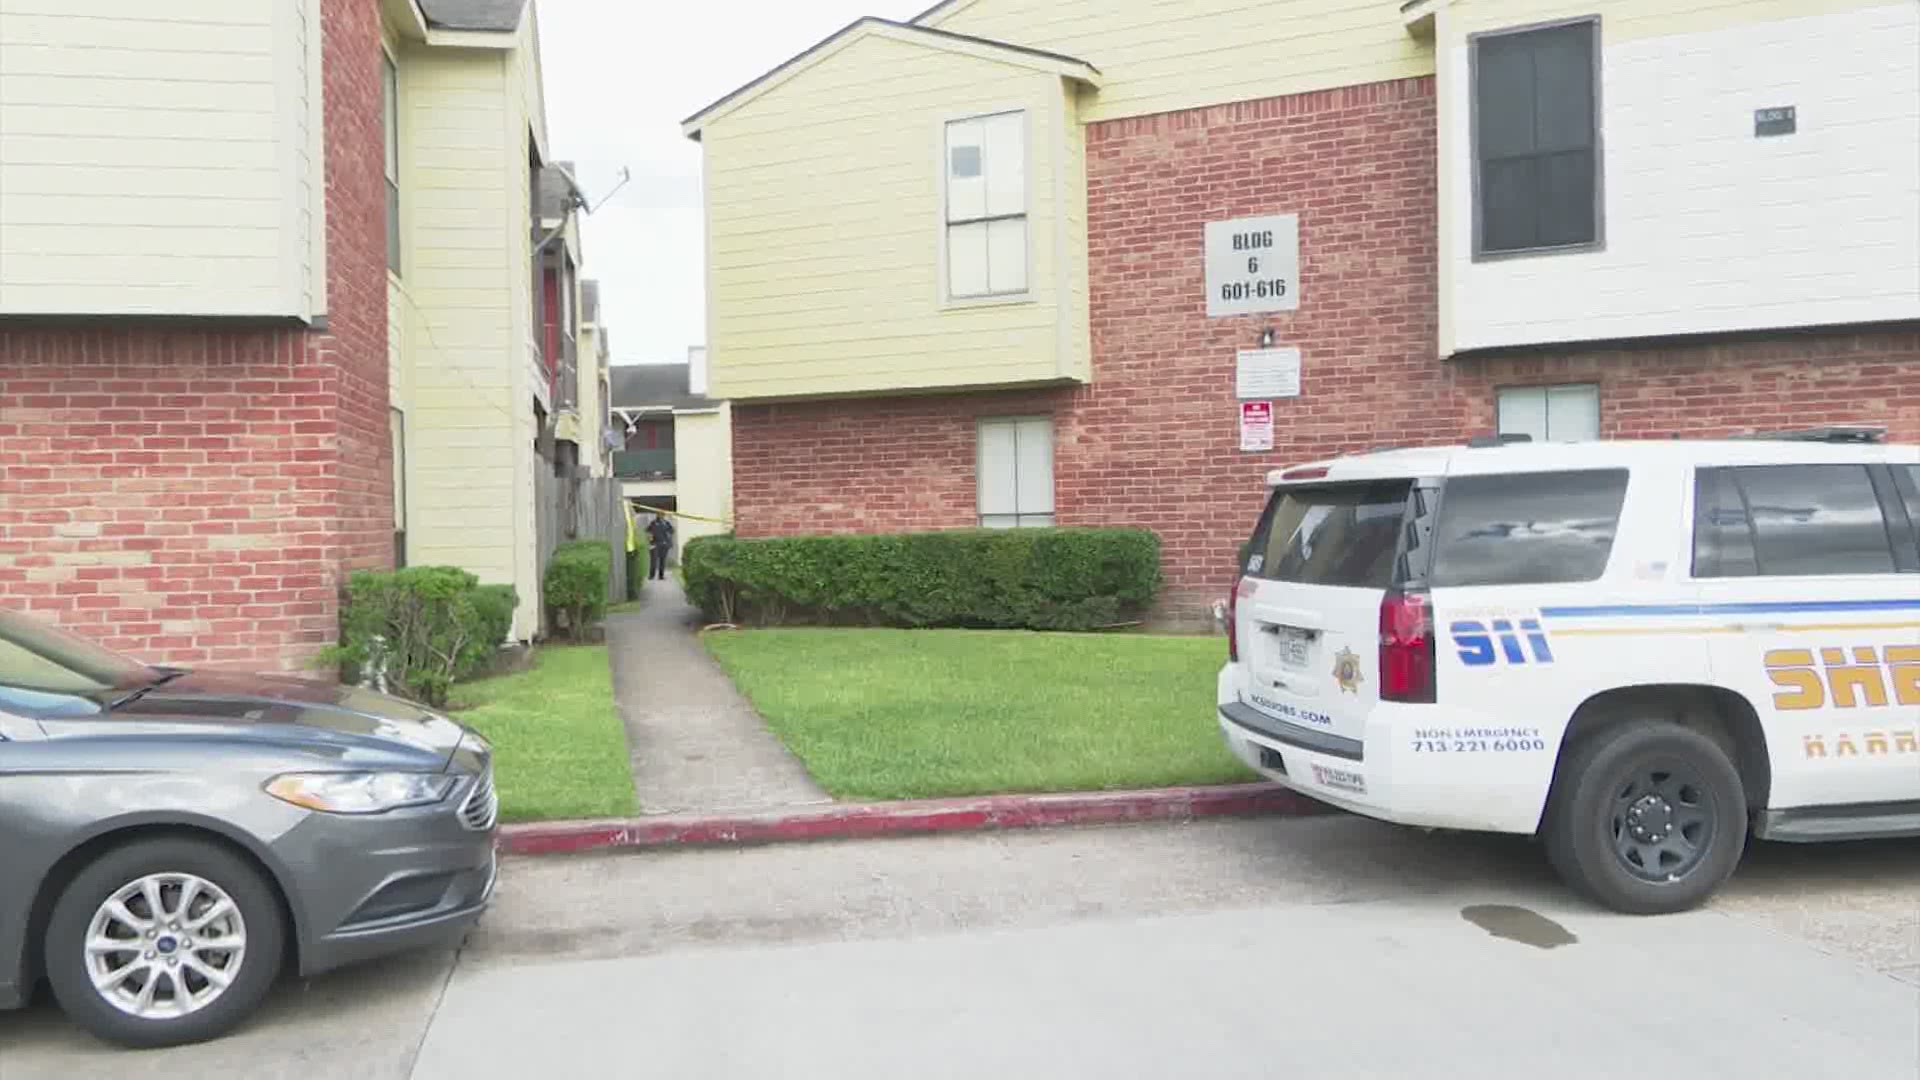 HCSO: Friend finds man shot to death in east Harris Co. apartment | khou.com